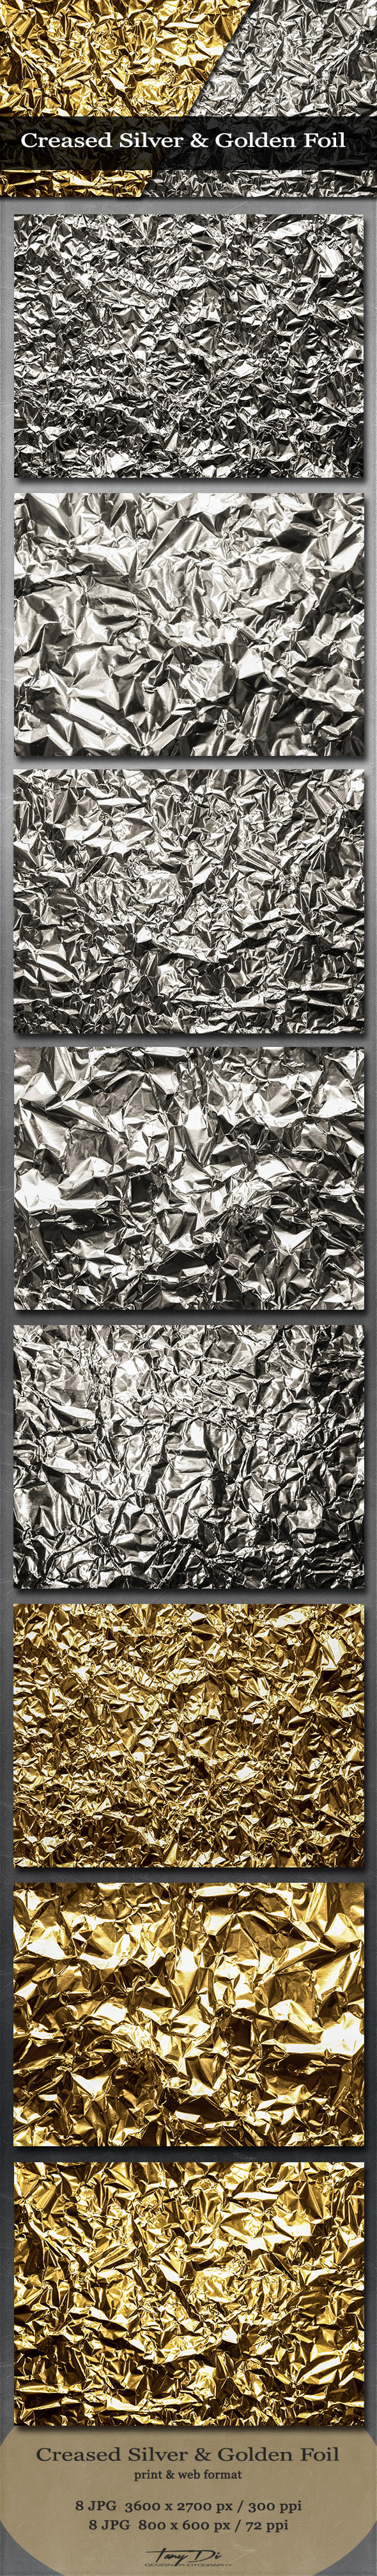 silver foil golden foil creased foil textures